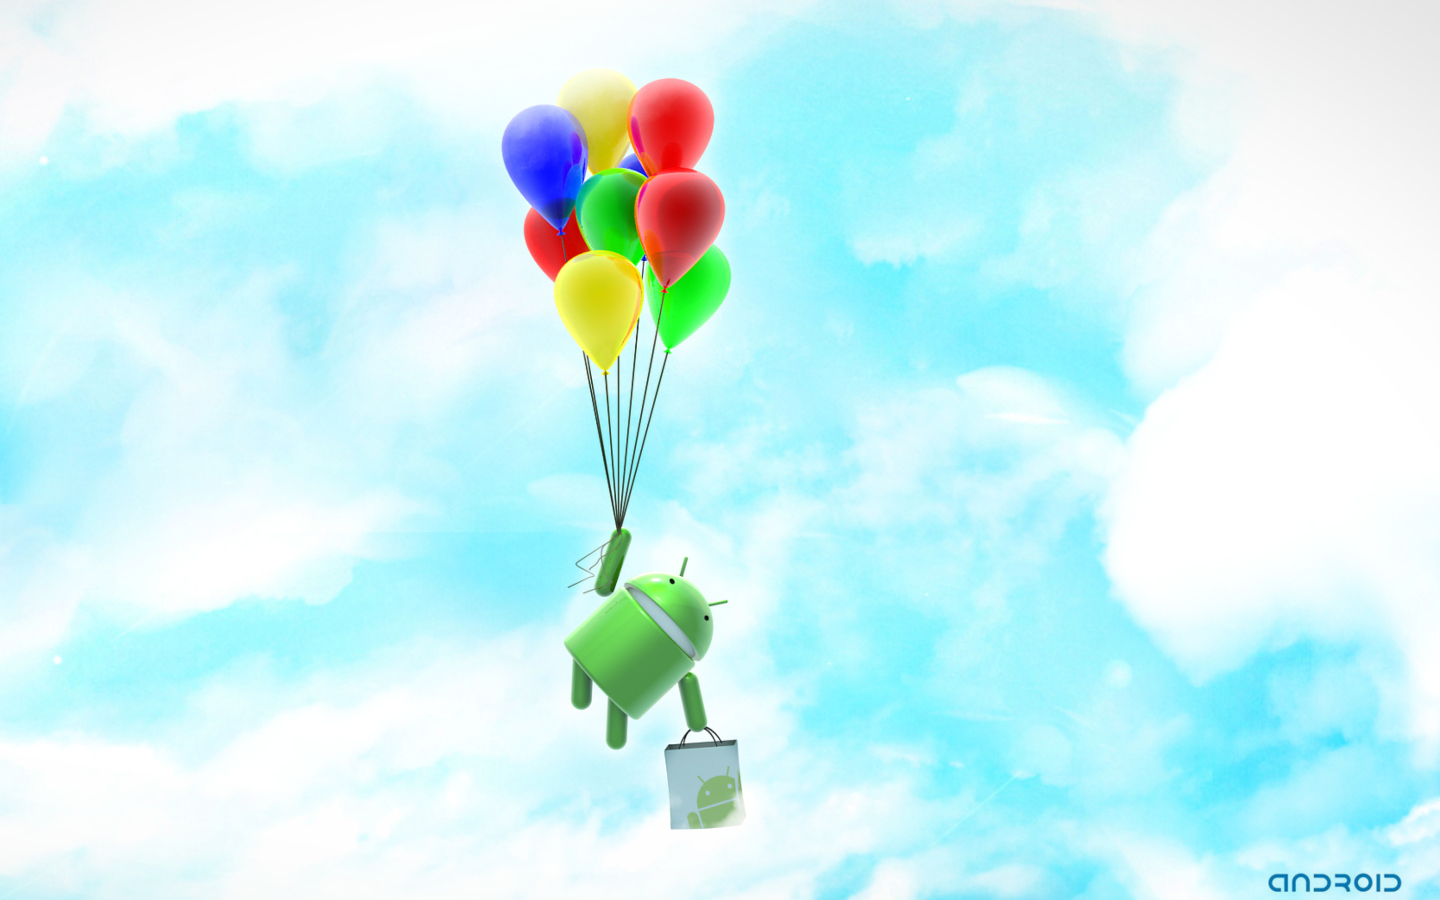 Android Balloon Flight wallpaper 1440x900